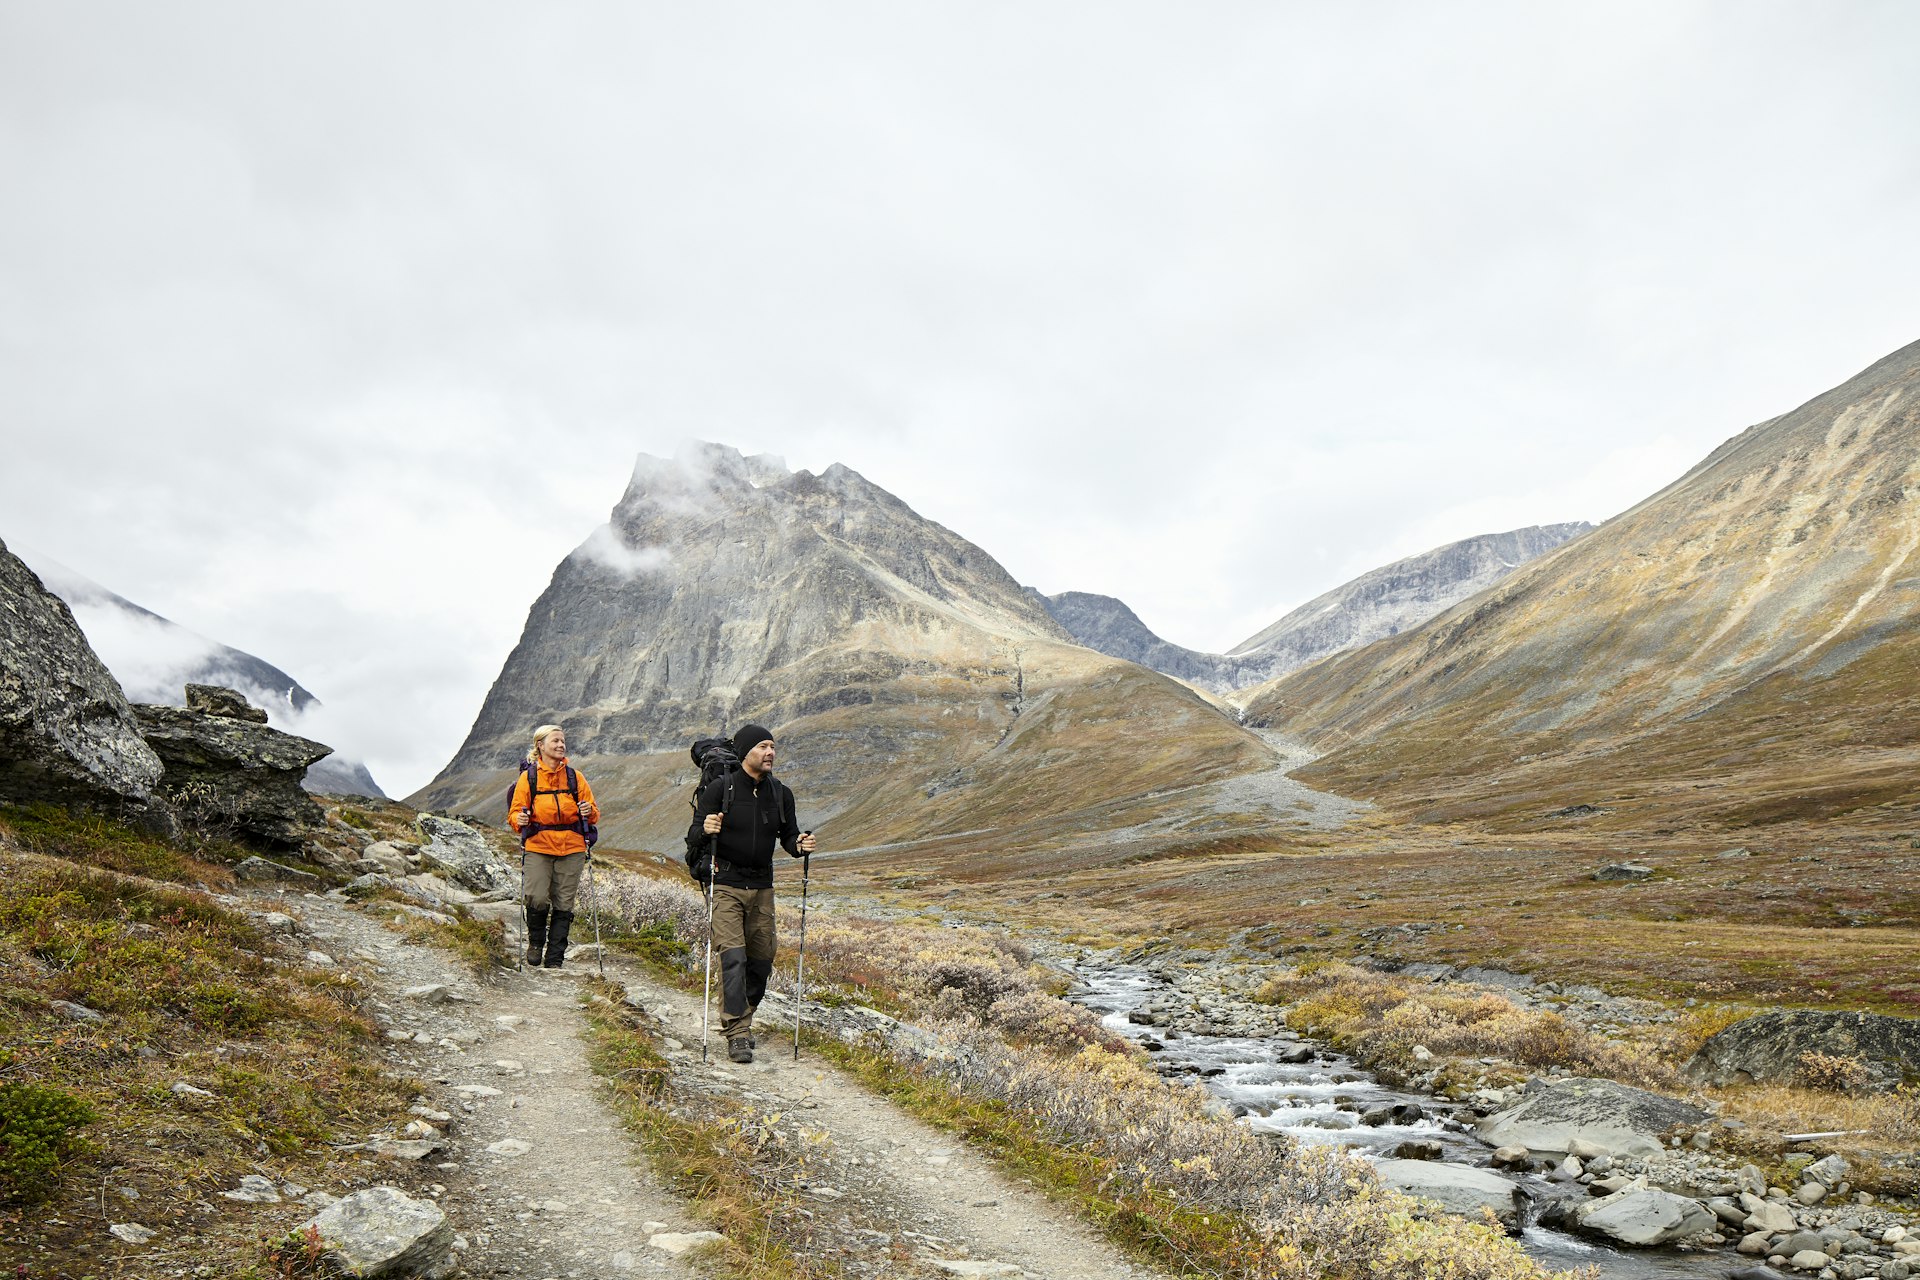 Couple hiking on a mountainous trail through the Jamtland region